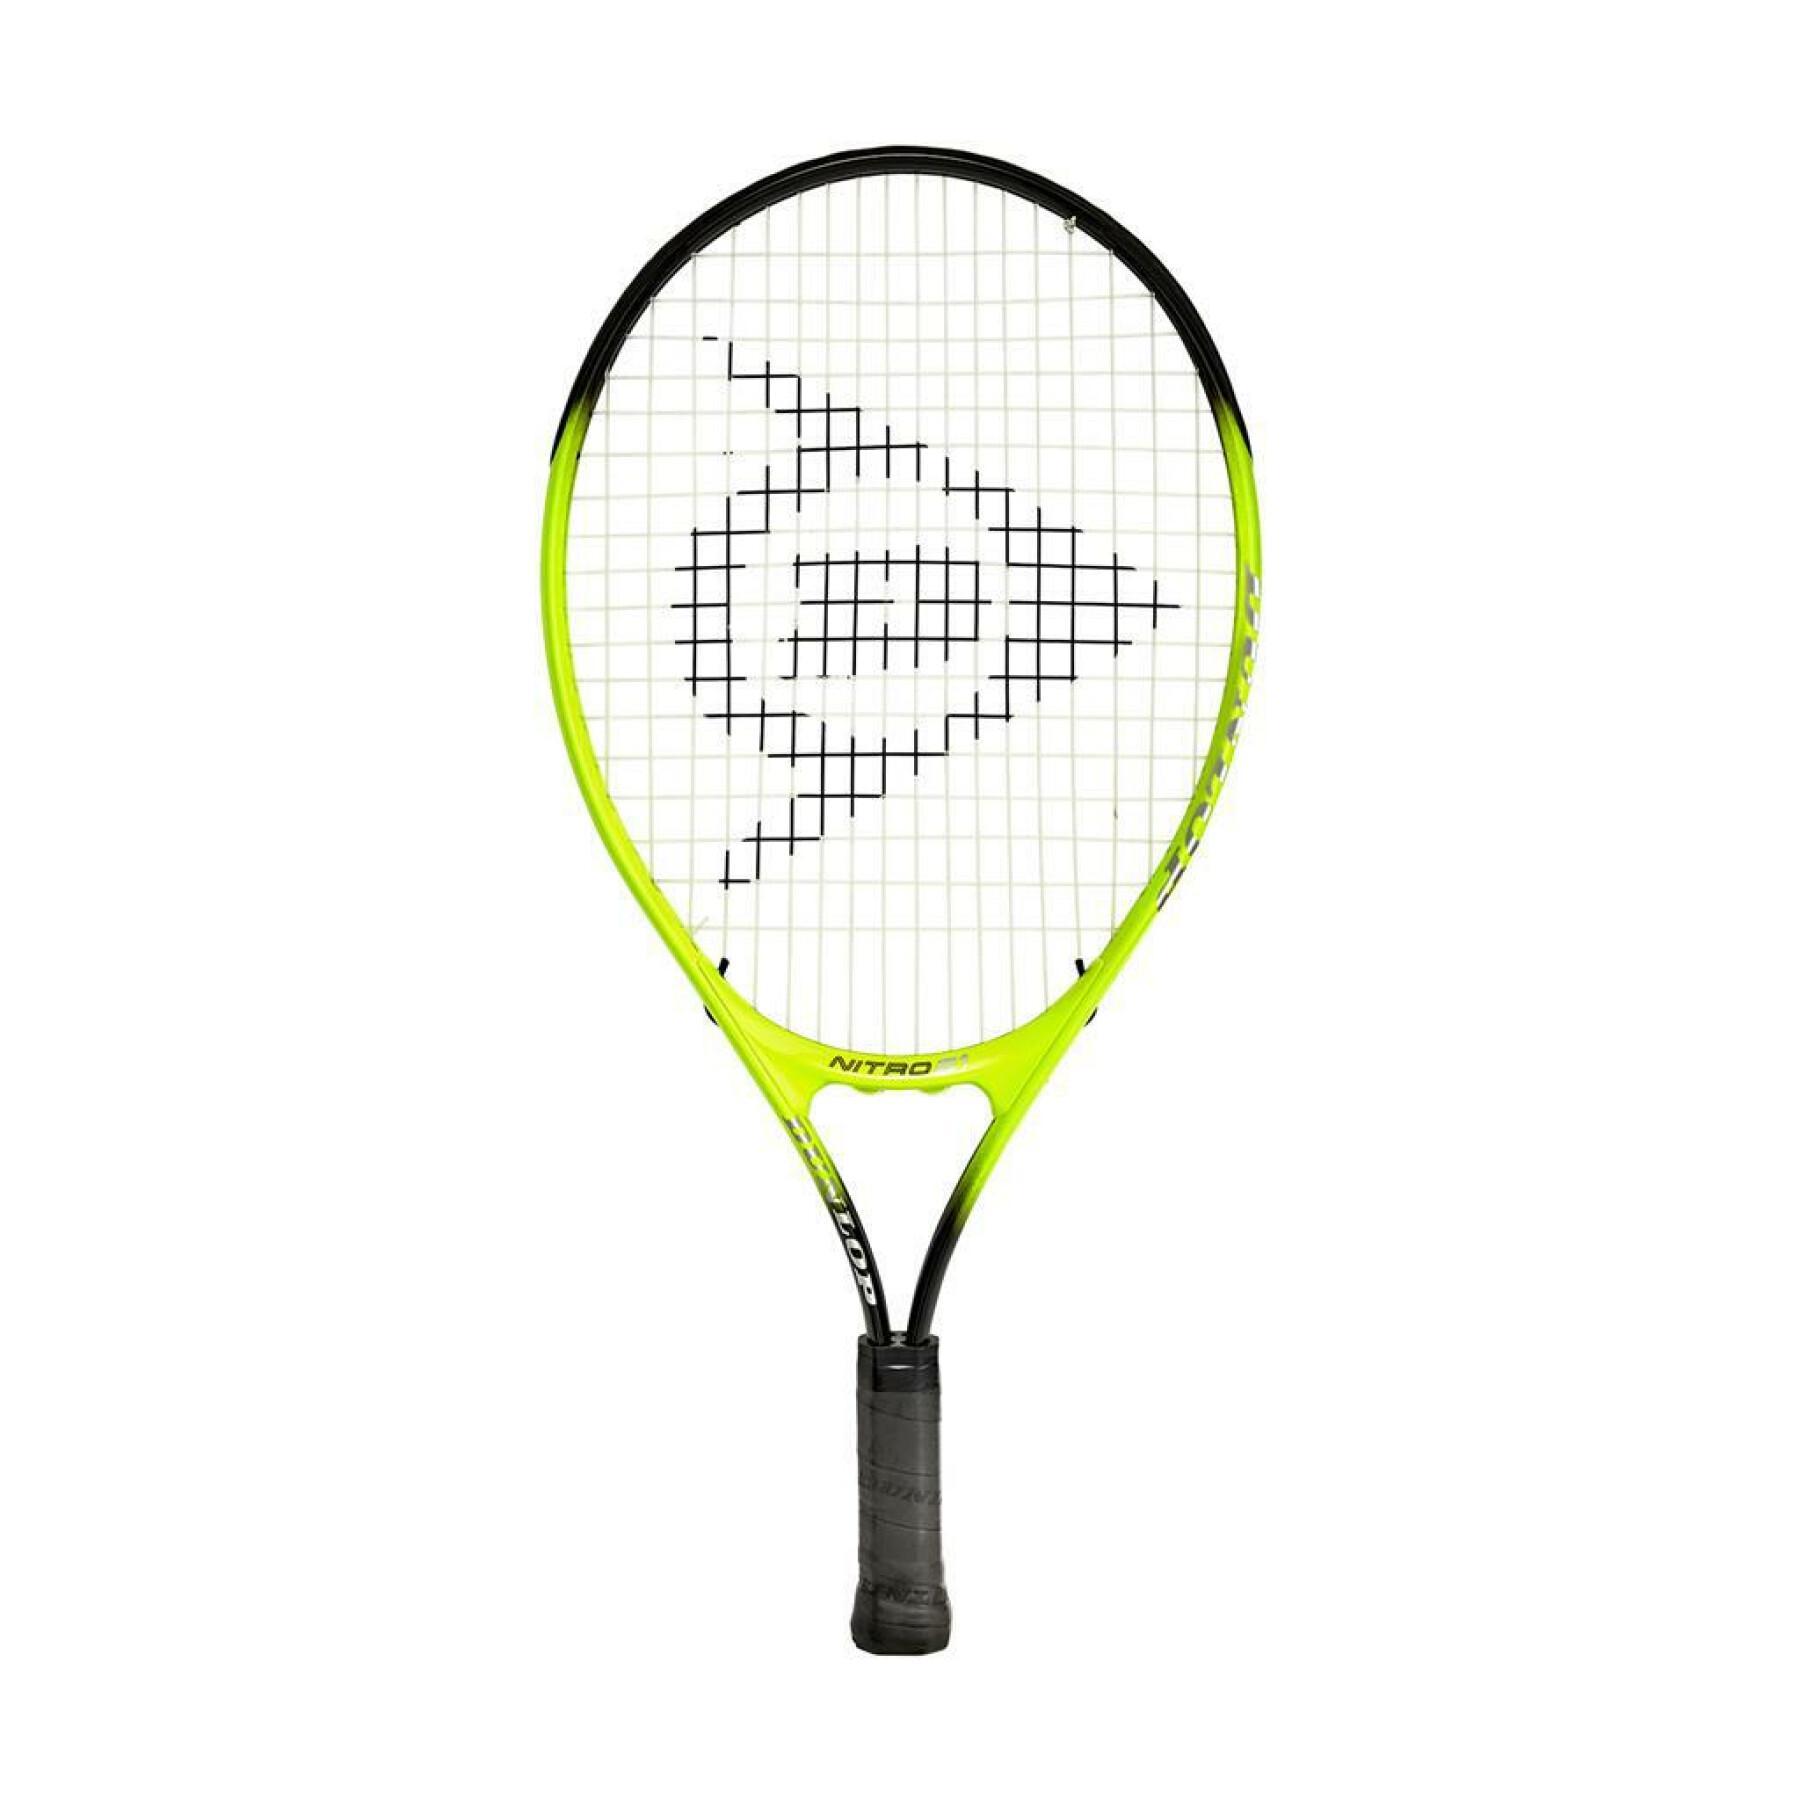 Barnens racket Dunlop nitro 21 g000